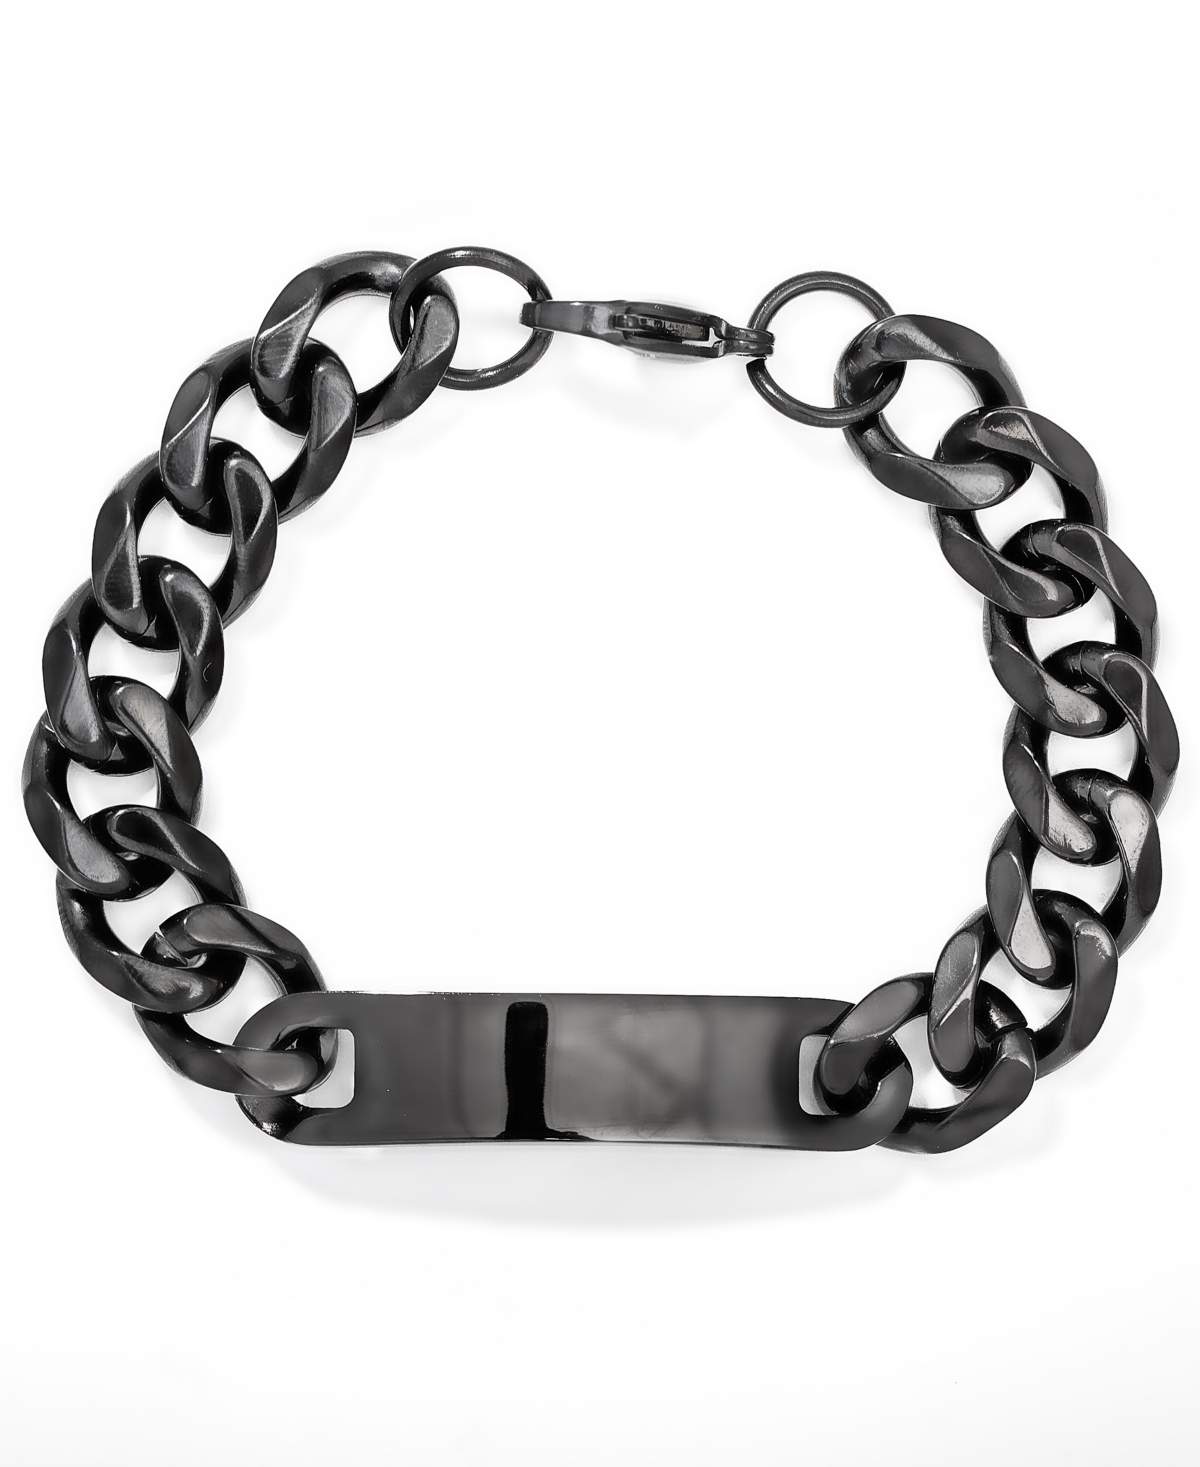 Eve's Jewelry Men's Black Id With Curb Links Bracelet